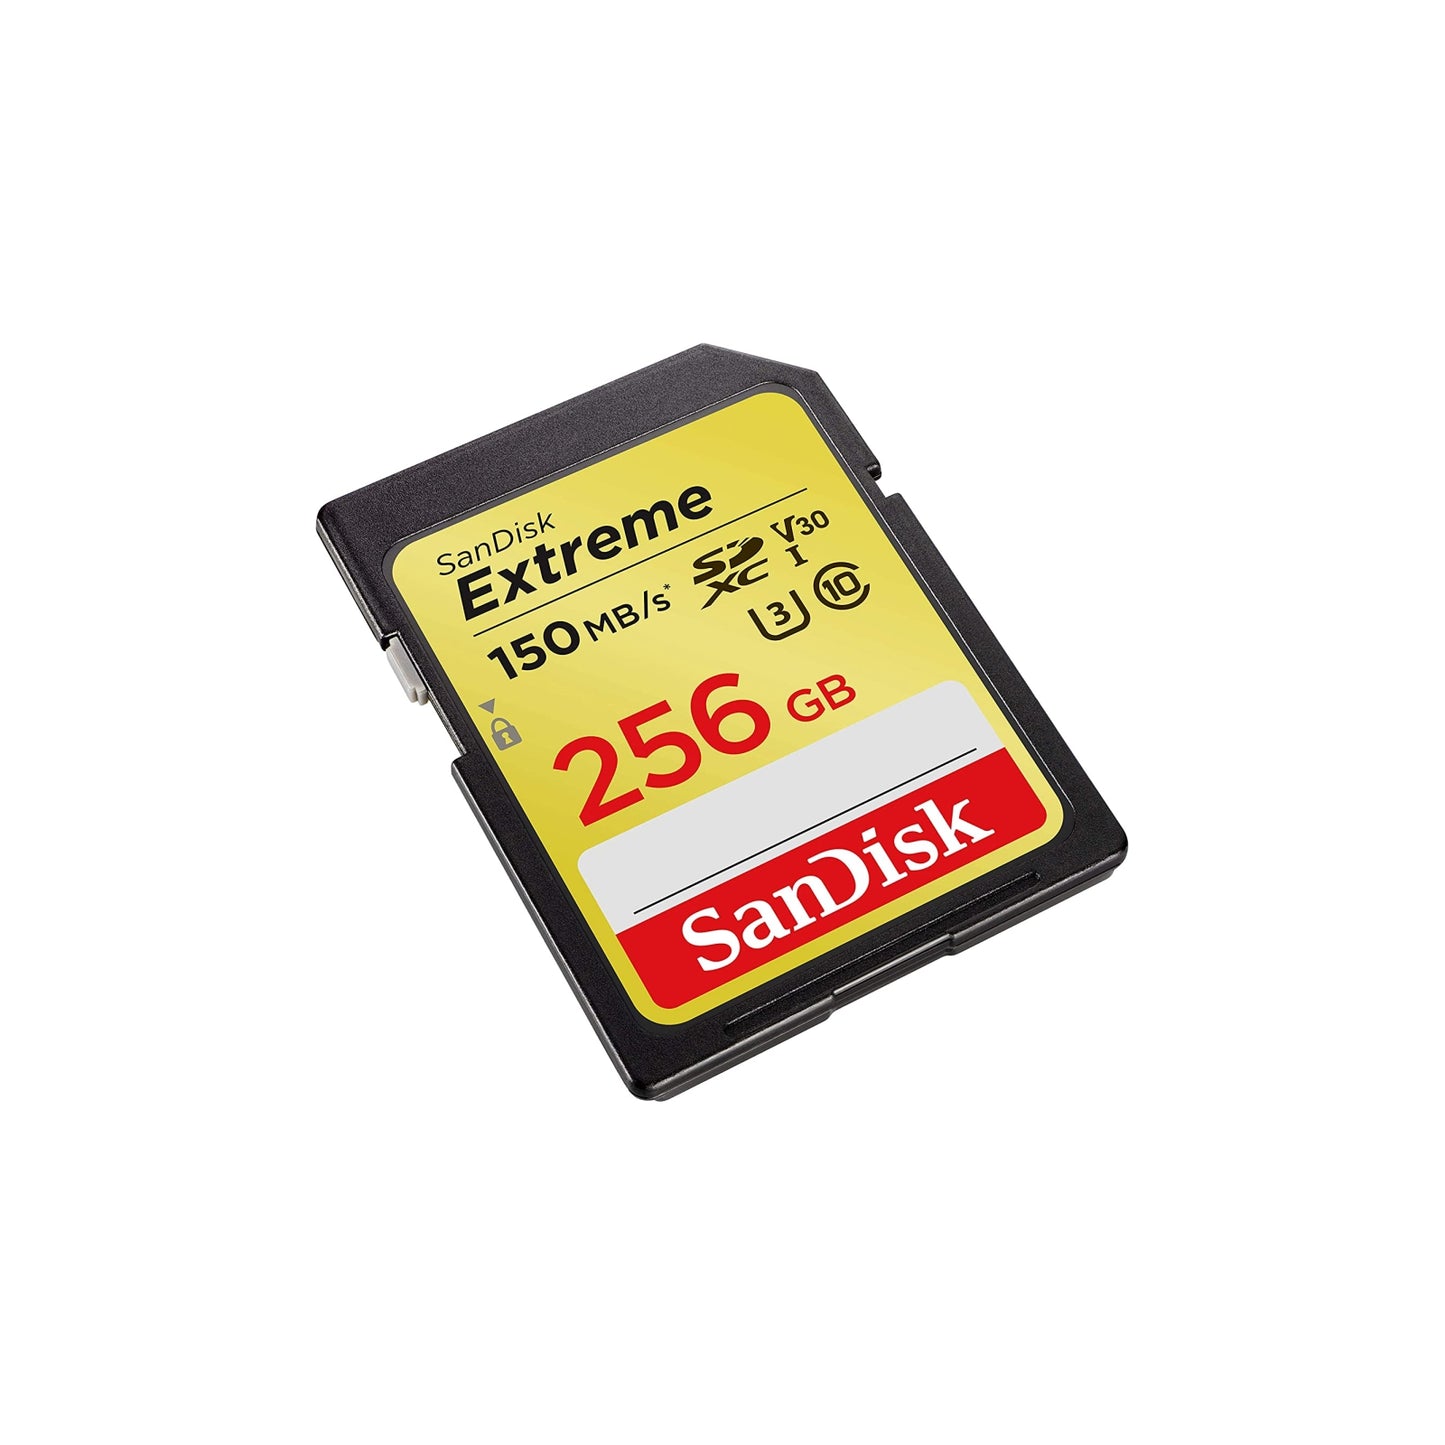 SanDisk Extreme 256GB SDXC 150MB/S Class 10 SD Camera Memory TF Card DSLR 4K UHD